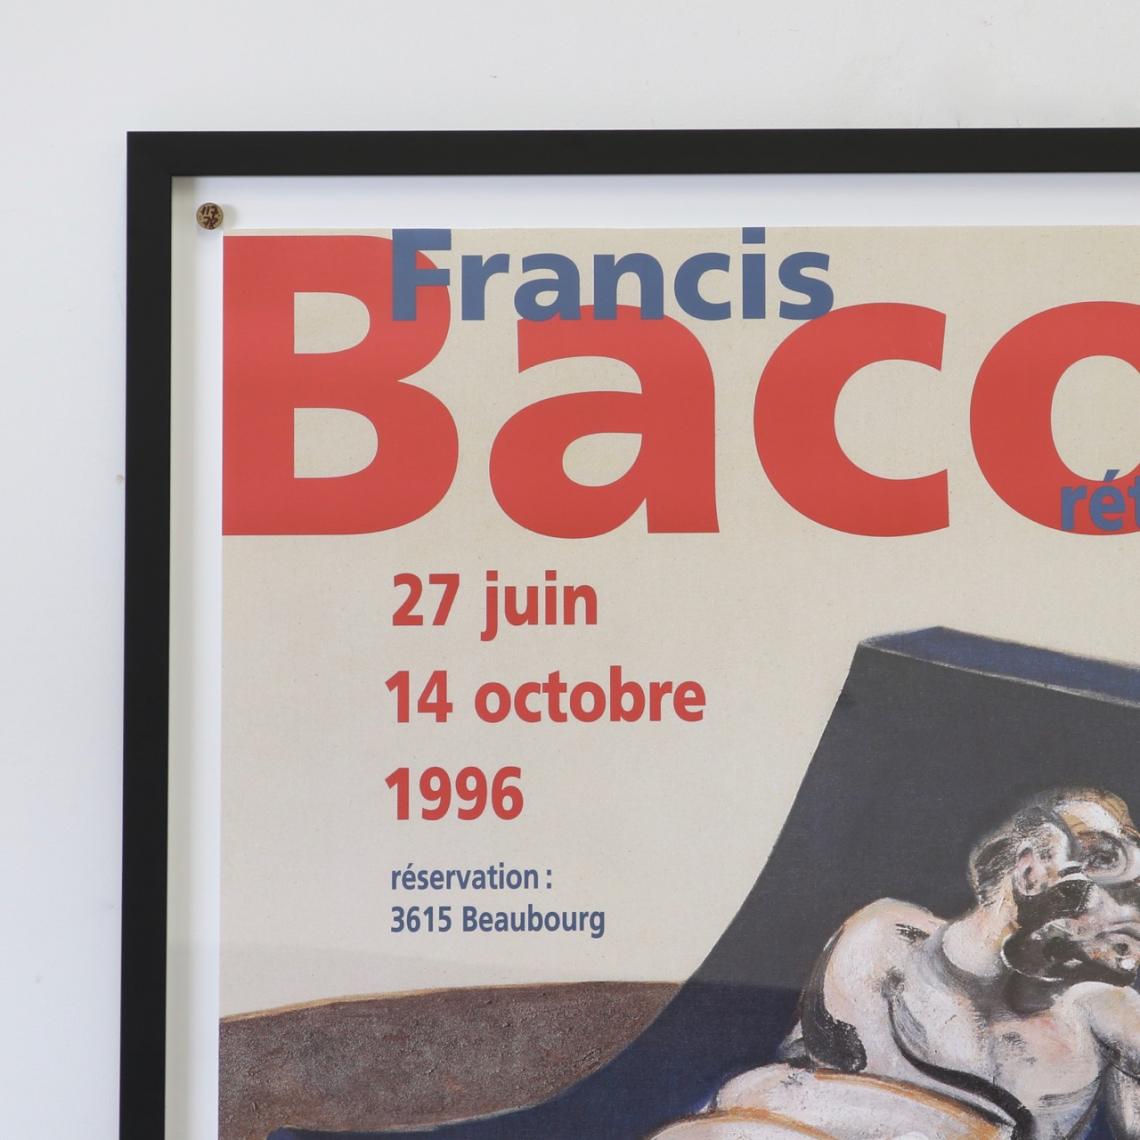 Francis Bacon Poster